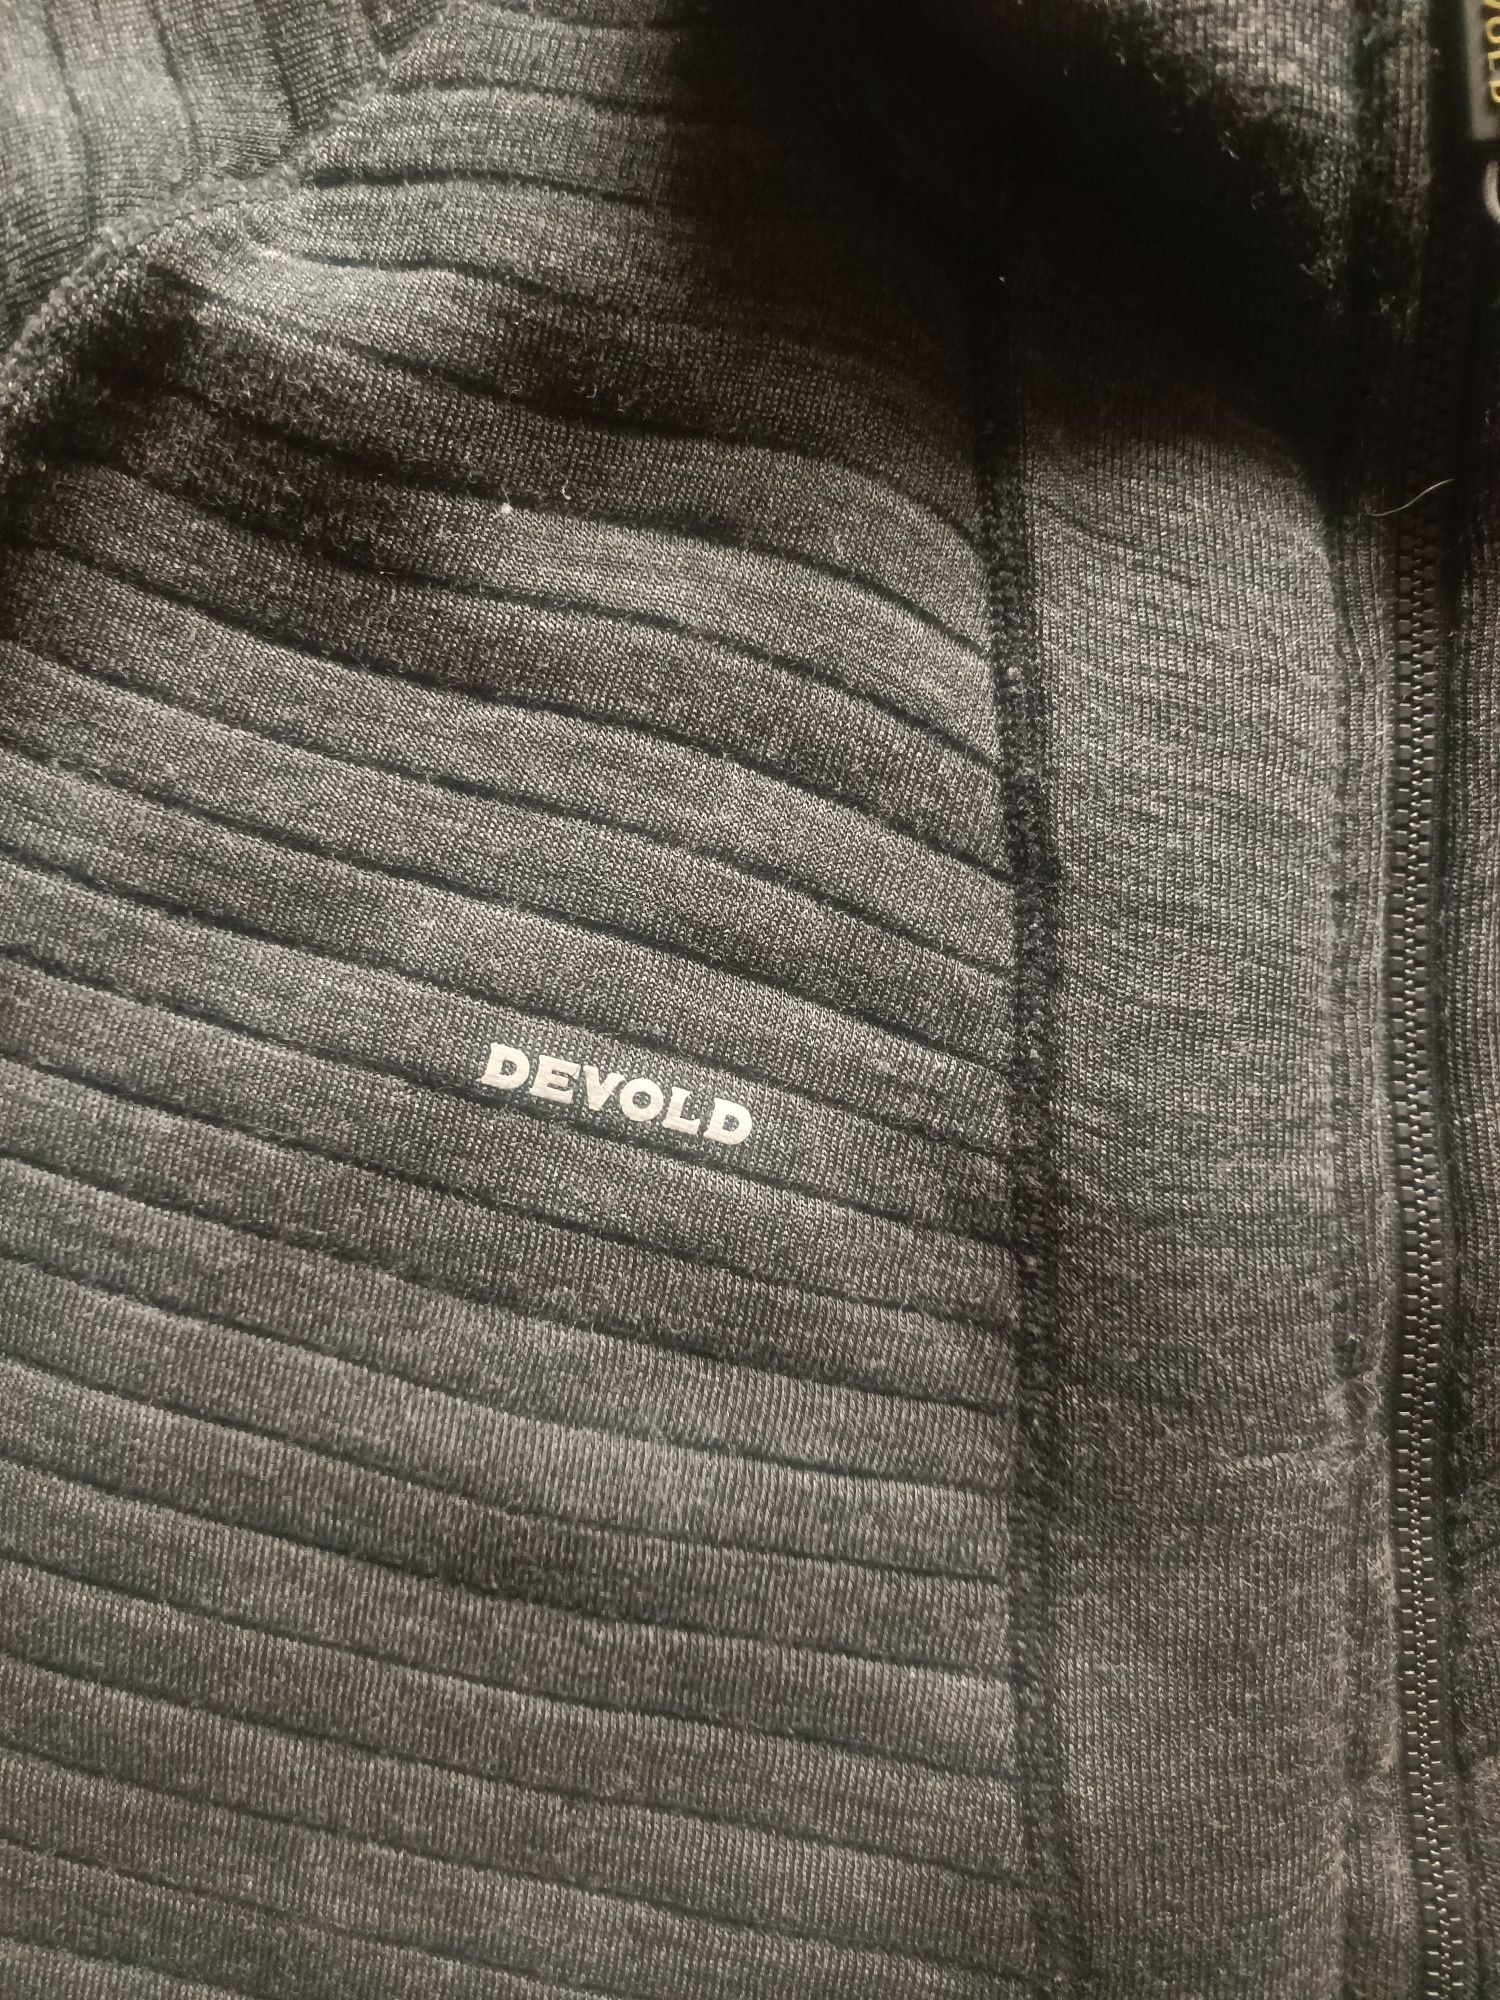 Kurtka bluza wełniana 75% merino DEVOLD Tinden, 320 g, r.XL